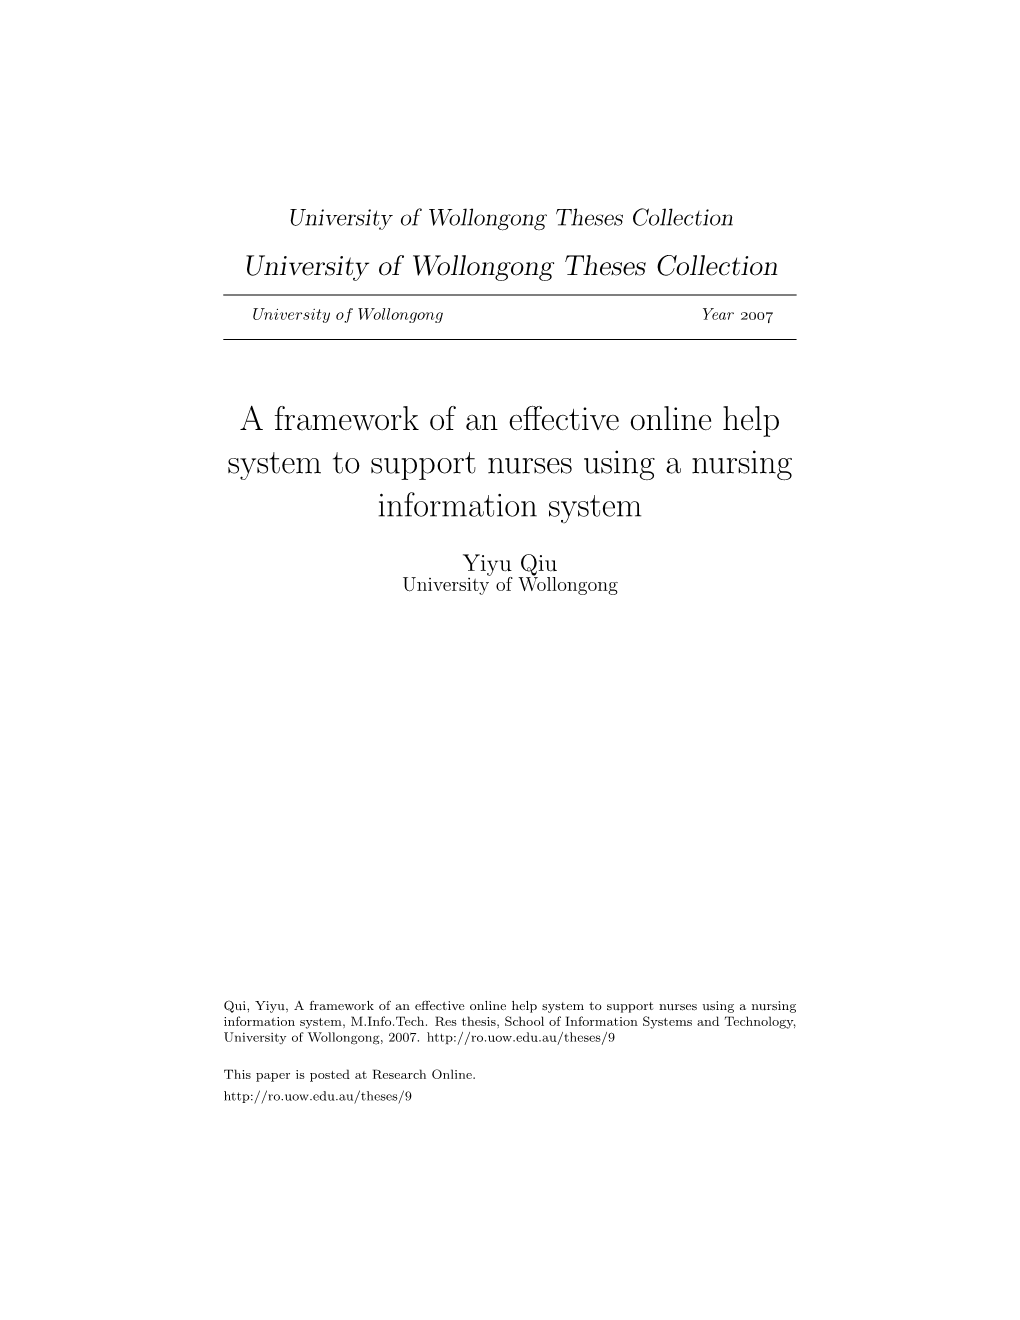 A Framework of an Effective Online Help System to Support Nurses Using a Nursing Information System